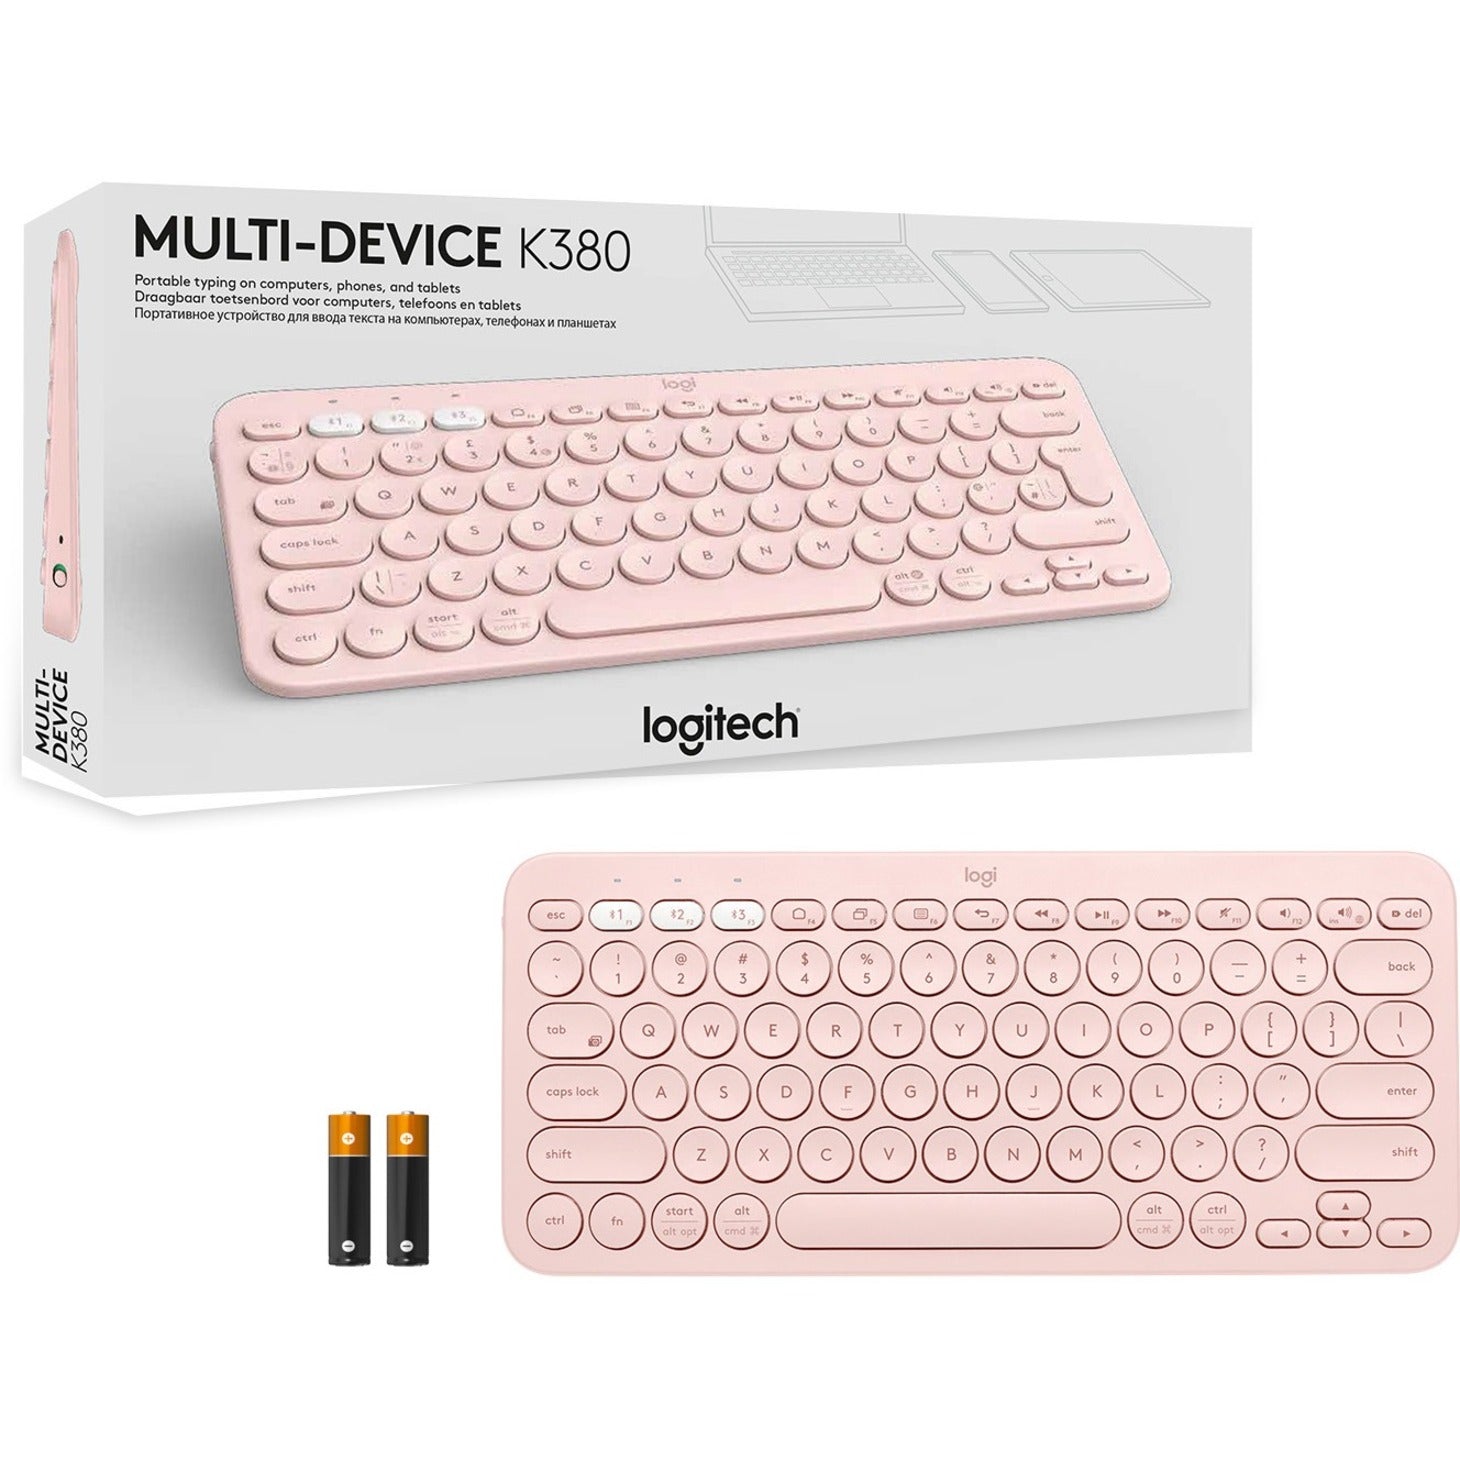 Logitech K380 Multi-device Bluetooth Keyboard - Slim, Quiet, and Lightweight [Discontinued]